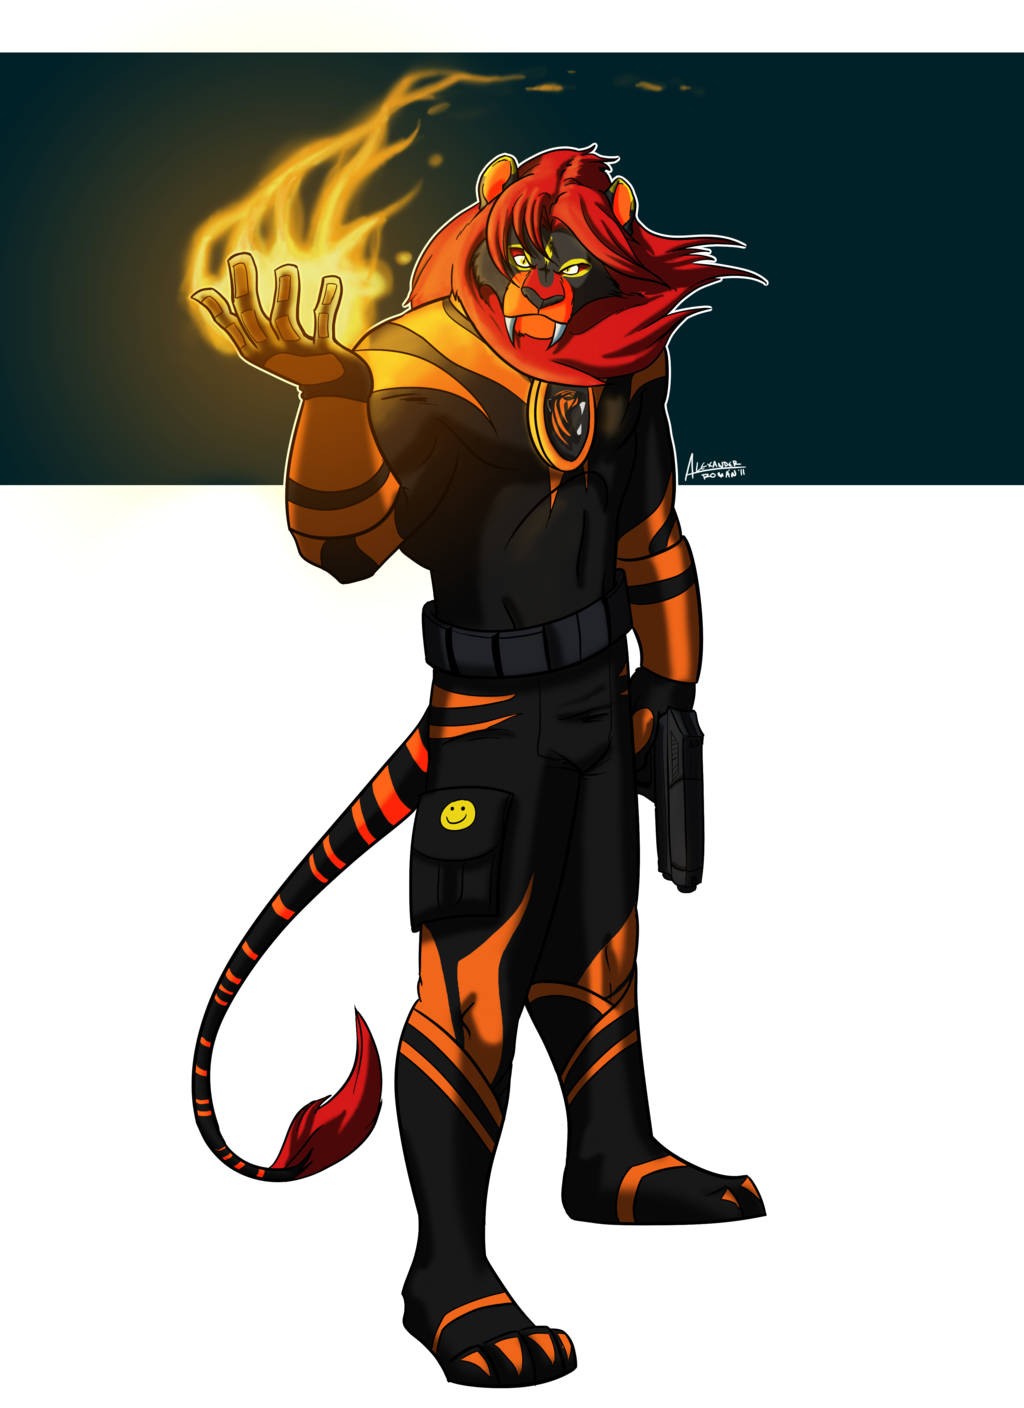 Inferno Sabercat - The Flame Burns Bright - By Amonomega